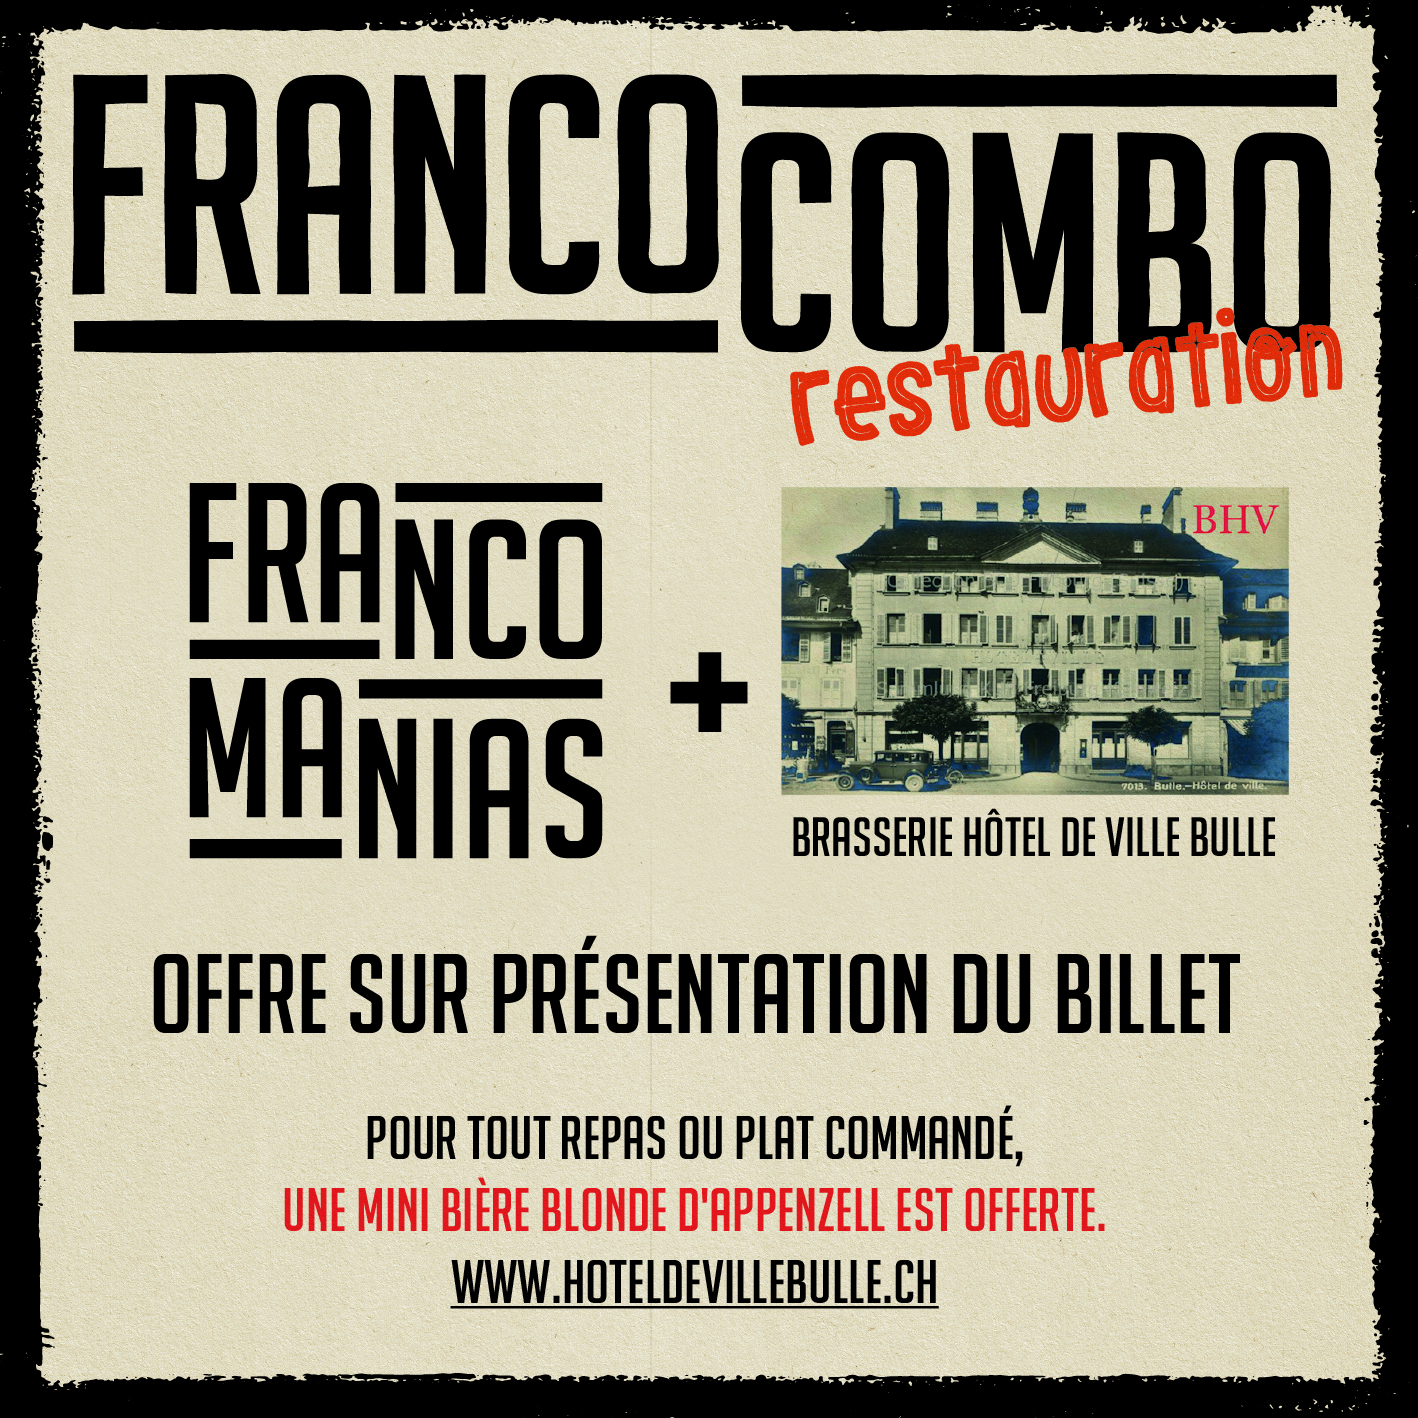 Franco'Combo Brasserie Hôtel-de-Ville Bulle